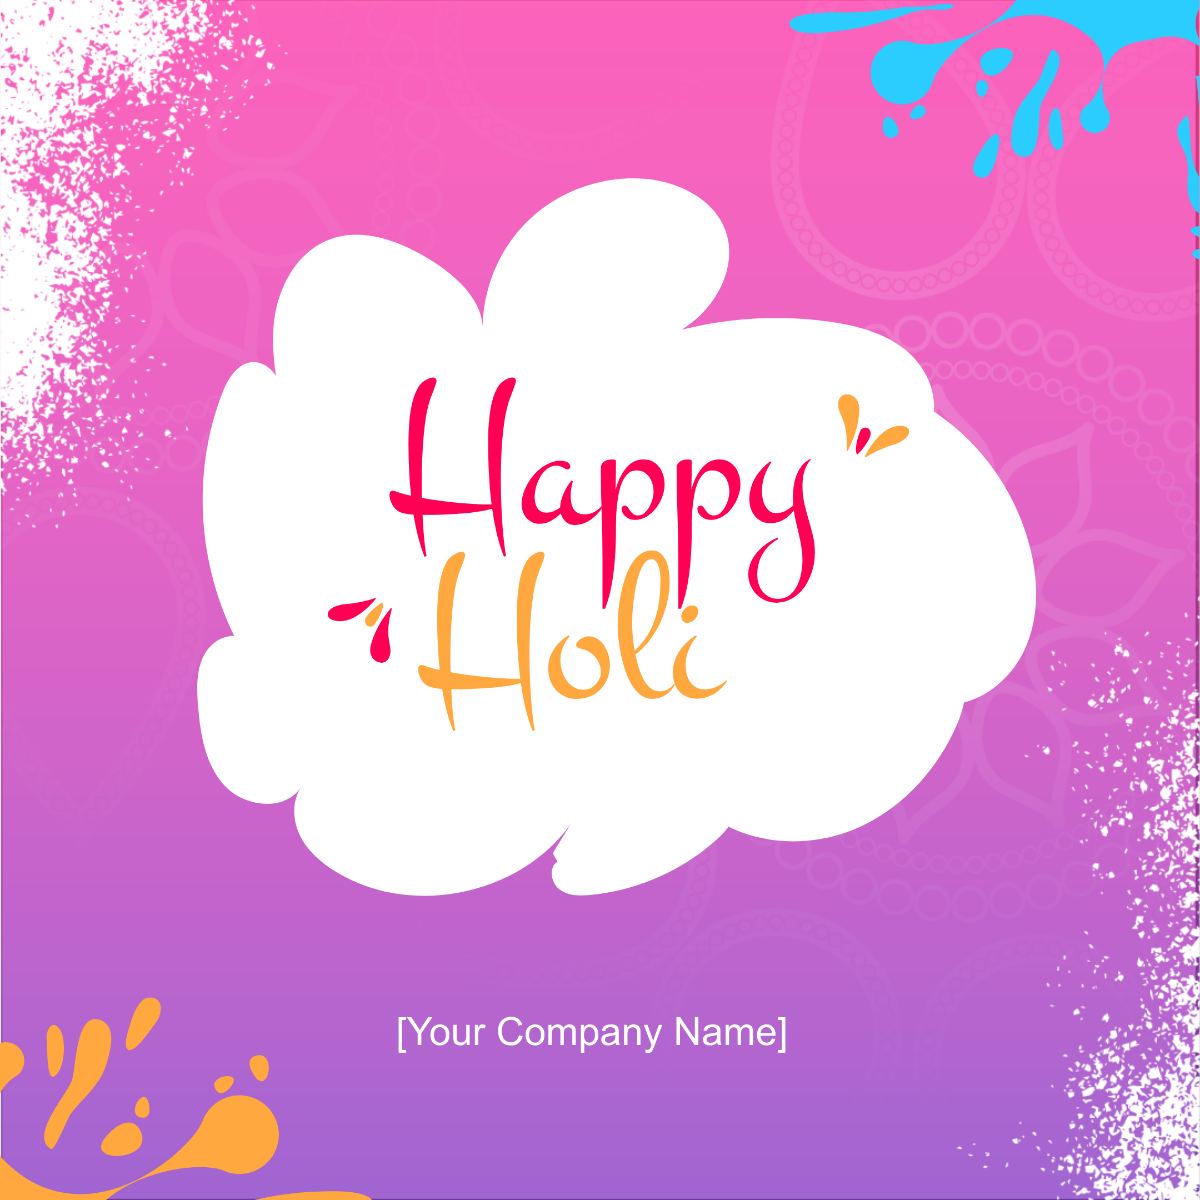 Happy Holi Facebook Post